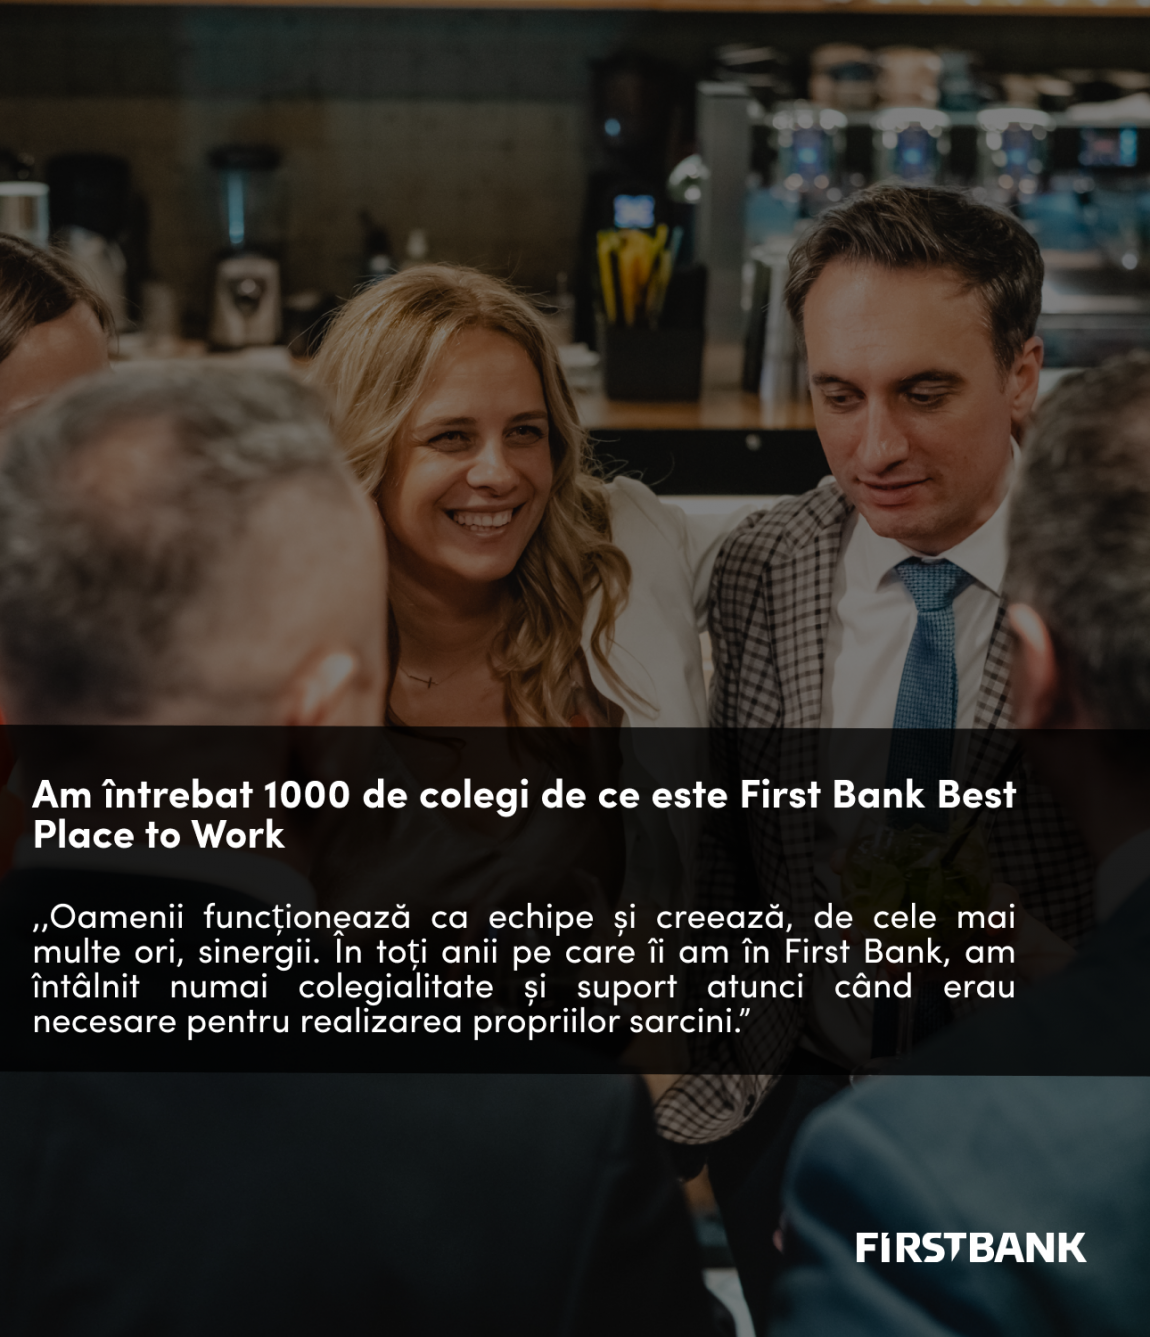  First Bank